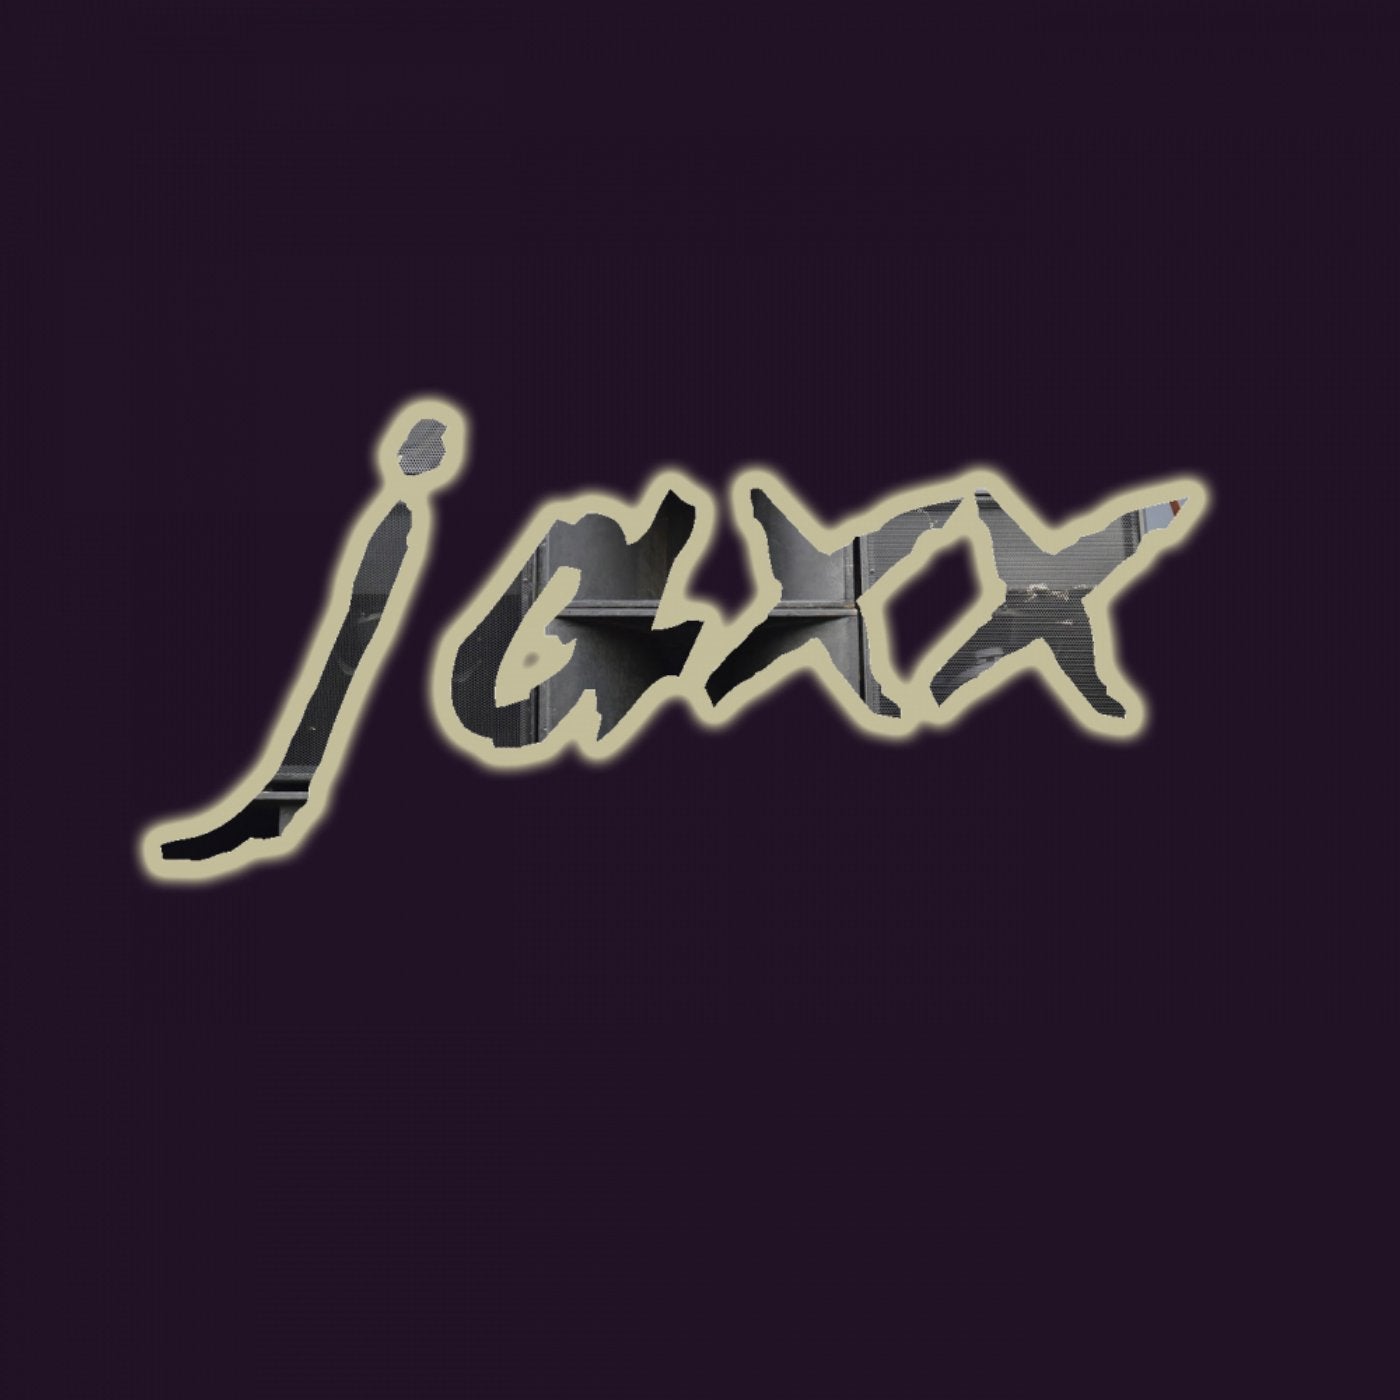 JAXX 006